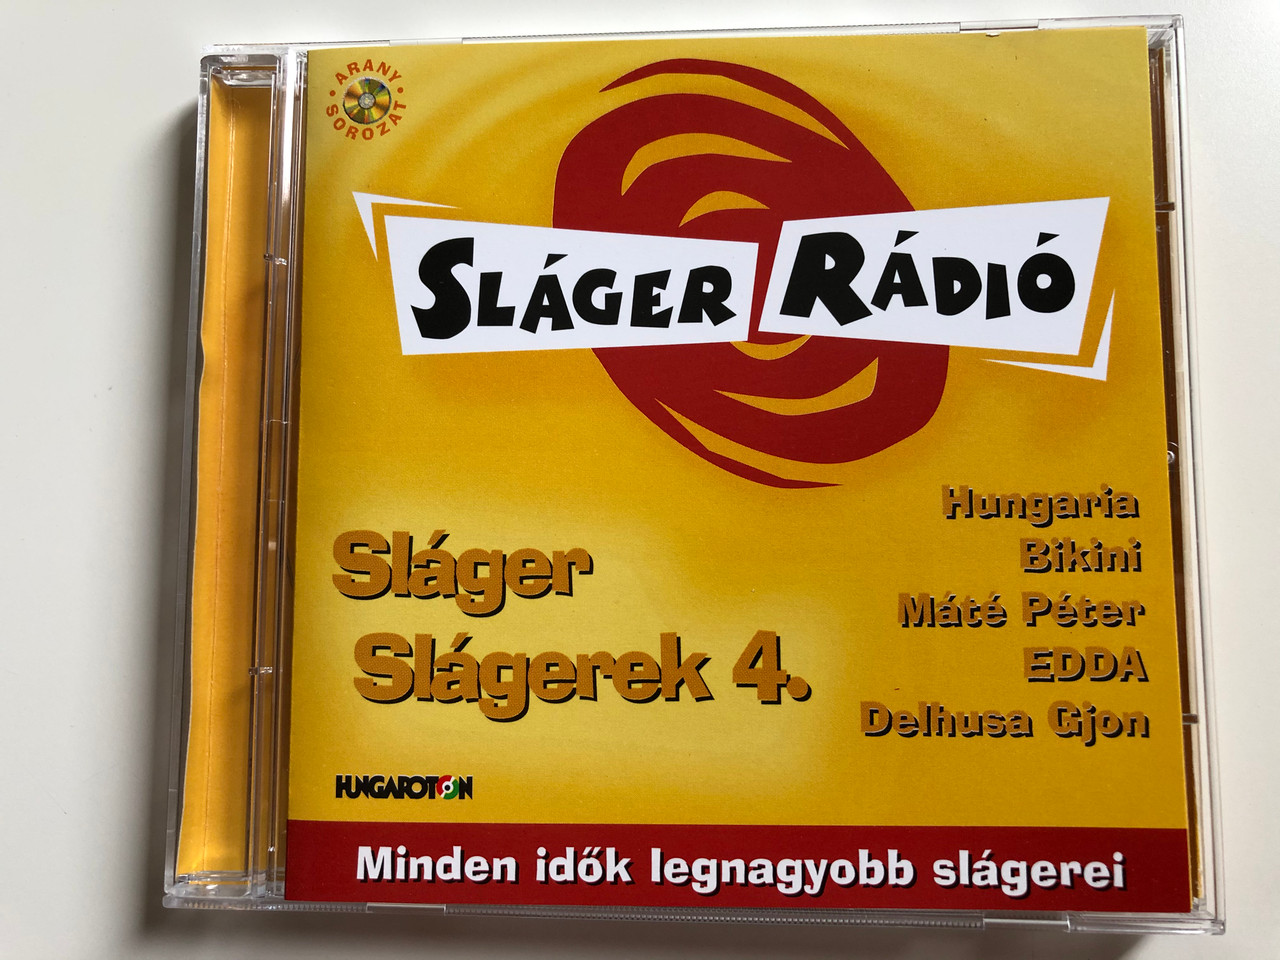 Sláger Radio / Sláger Slágerek 4. / Hungaria, Bikini, Mate Peter, EDDA,  Delhusa Gjon / Minden idok legnagyobb slagerei / Hungaroton Audio CD 2000 /  HCD 71031 - bibleinmylanguage